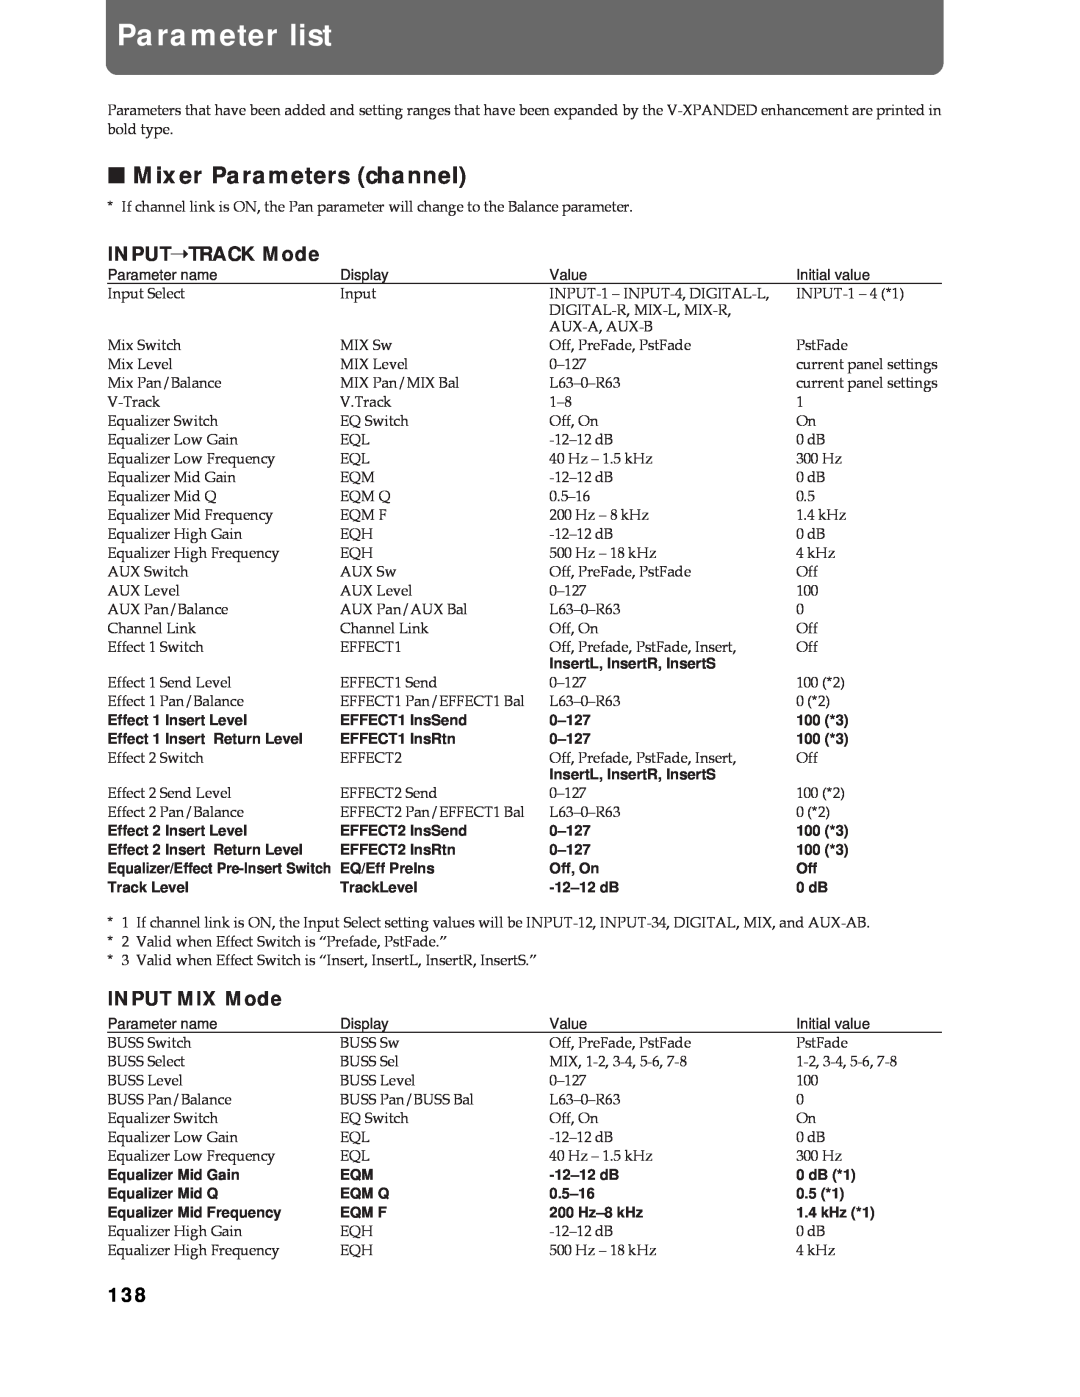 Roland Vs-880 important safety instructions Parameter list, Mixer Parameters channel, INPUTTRACK Mode, INPUT MIX Mode 